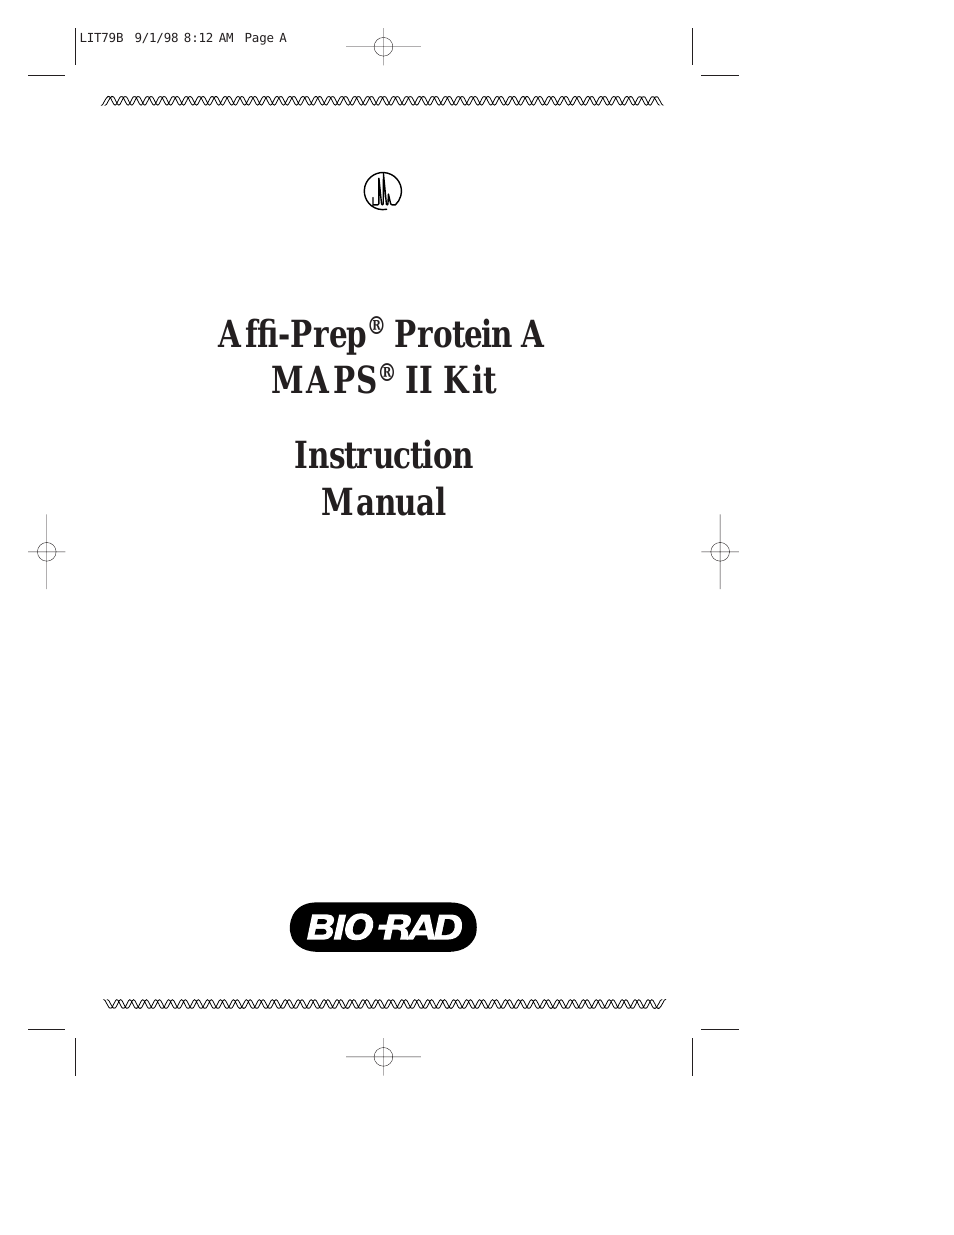 Affi-Prep Protein A Media